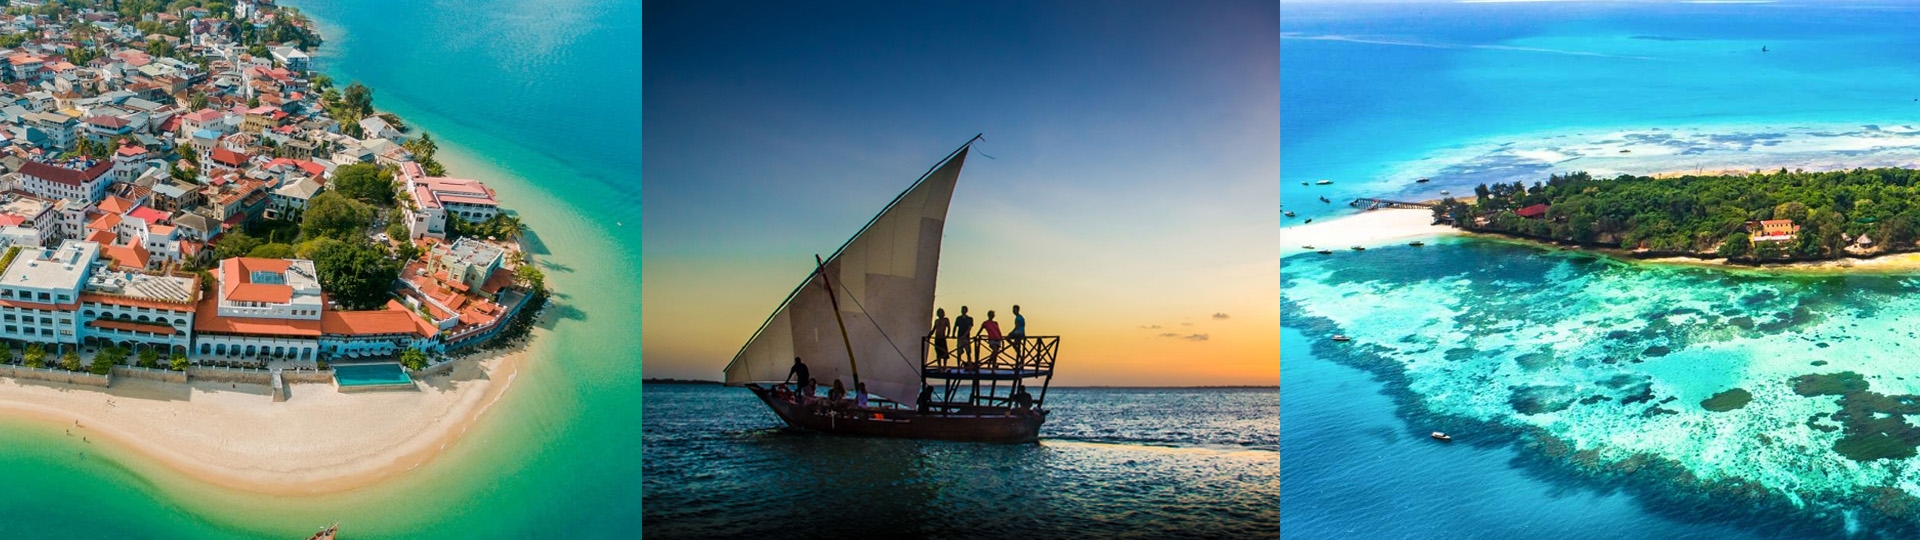 Zanzibar Tours and Excursions